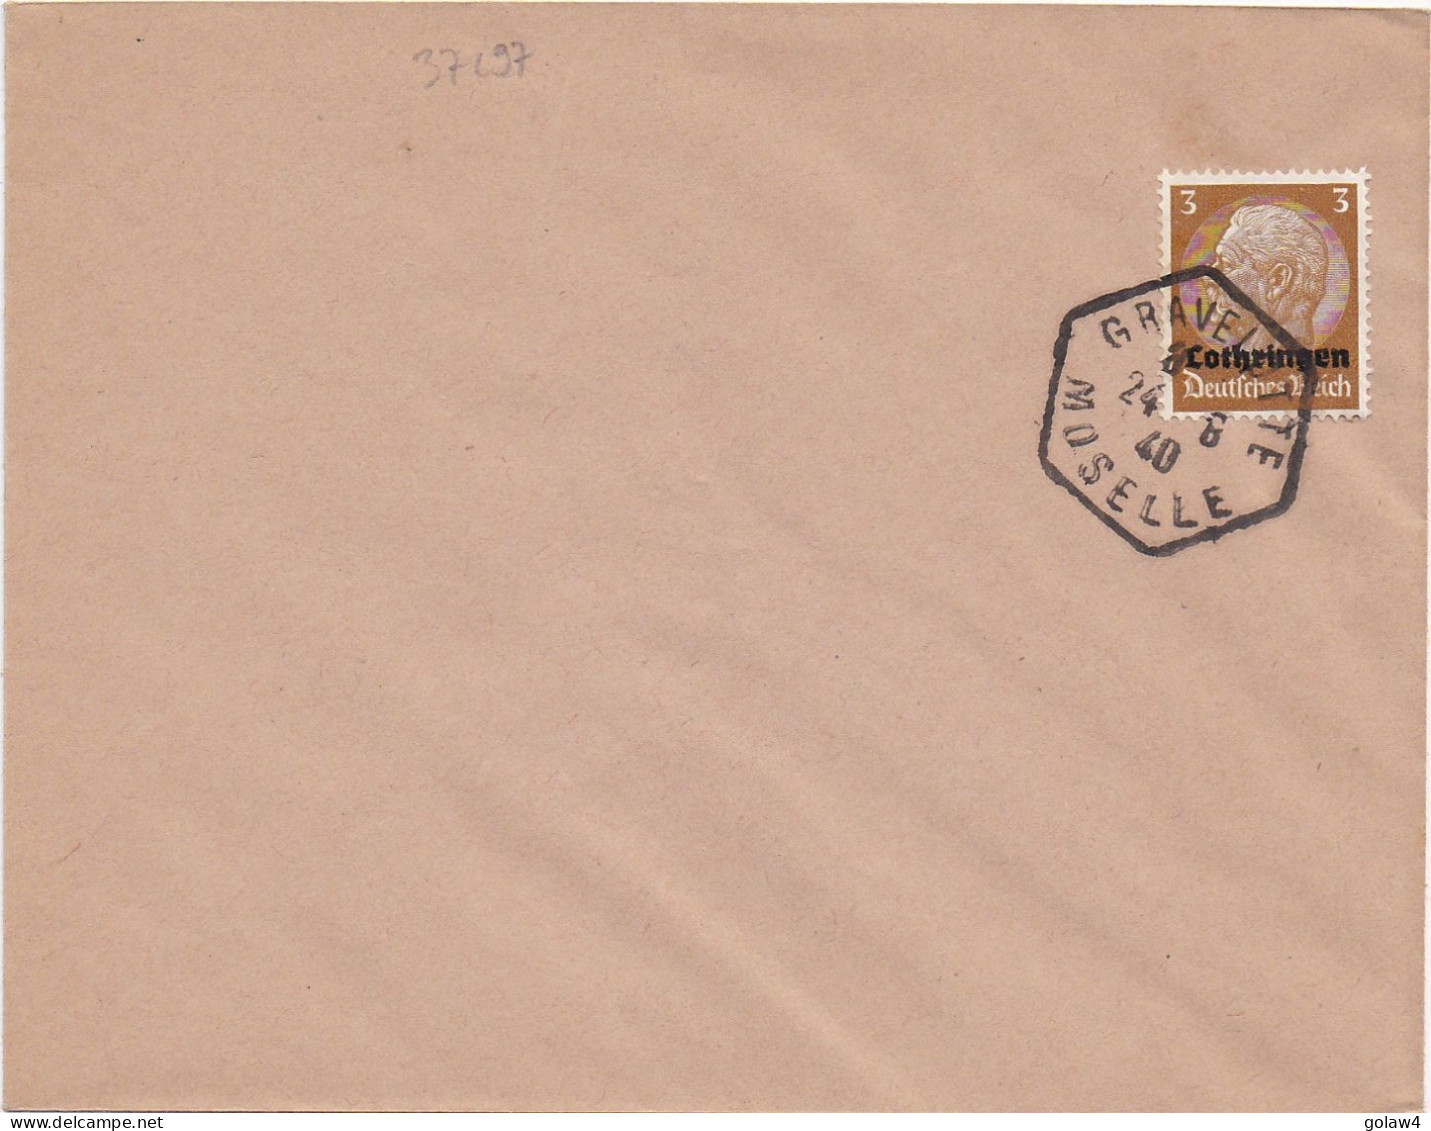 37197# HINDENBURG LOTHRINGEN LETTRE Obl GRAVELOTTE MOSELLE 24 Aout 1940 - Storia Postale